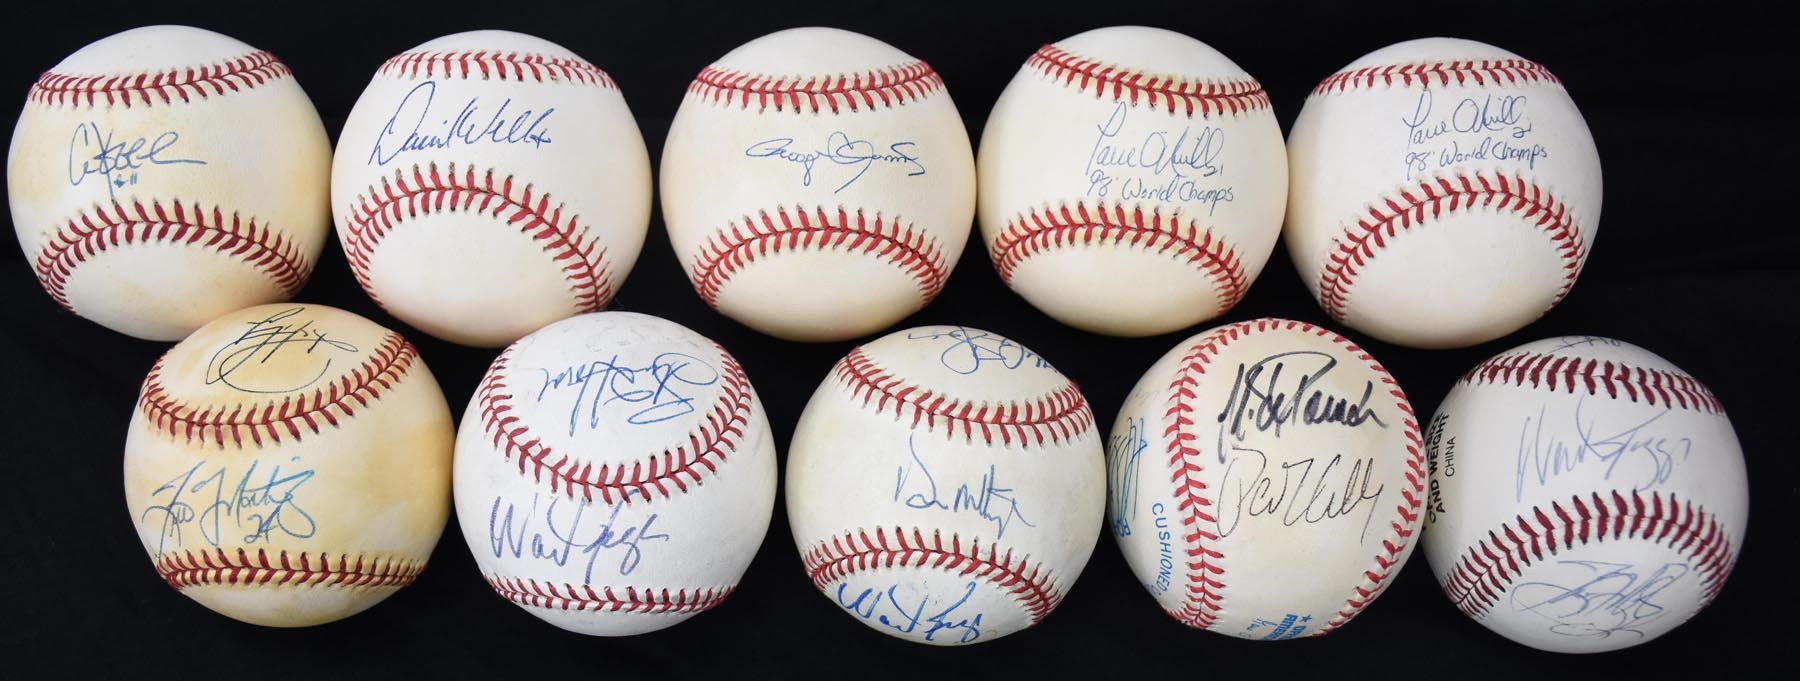 NY Yankees, Giants & Mets - Yankee Greats Single & Multi Signed Baseballs (10)